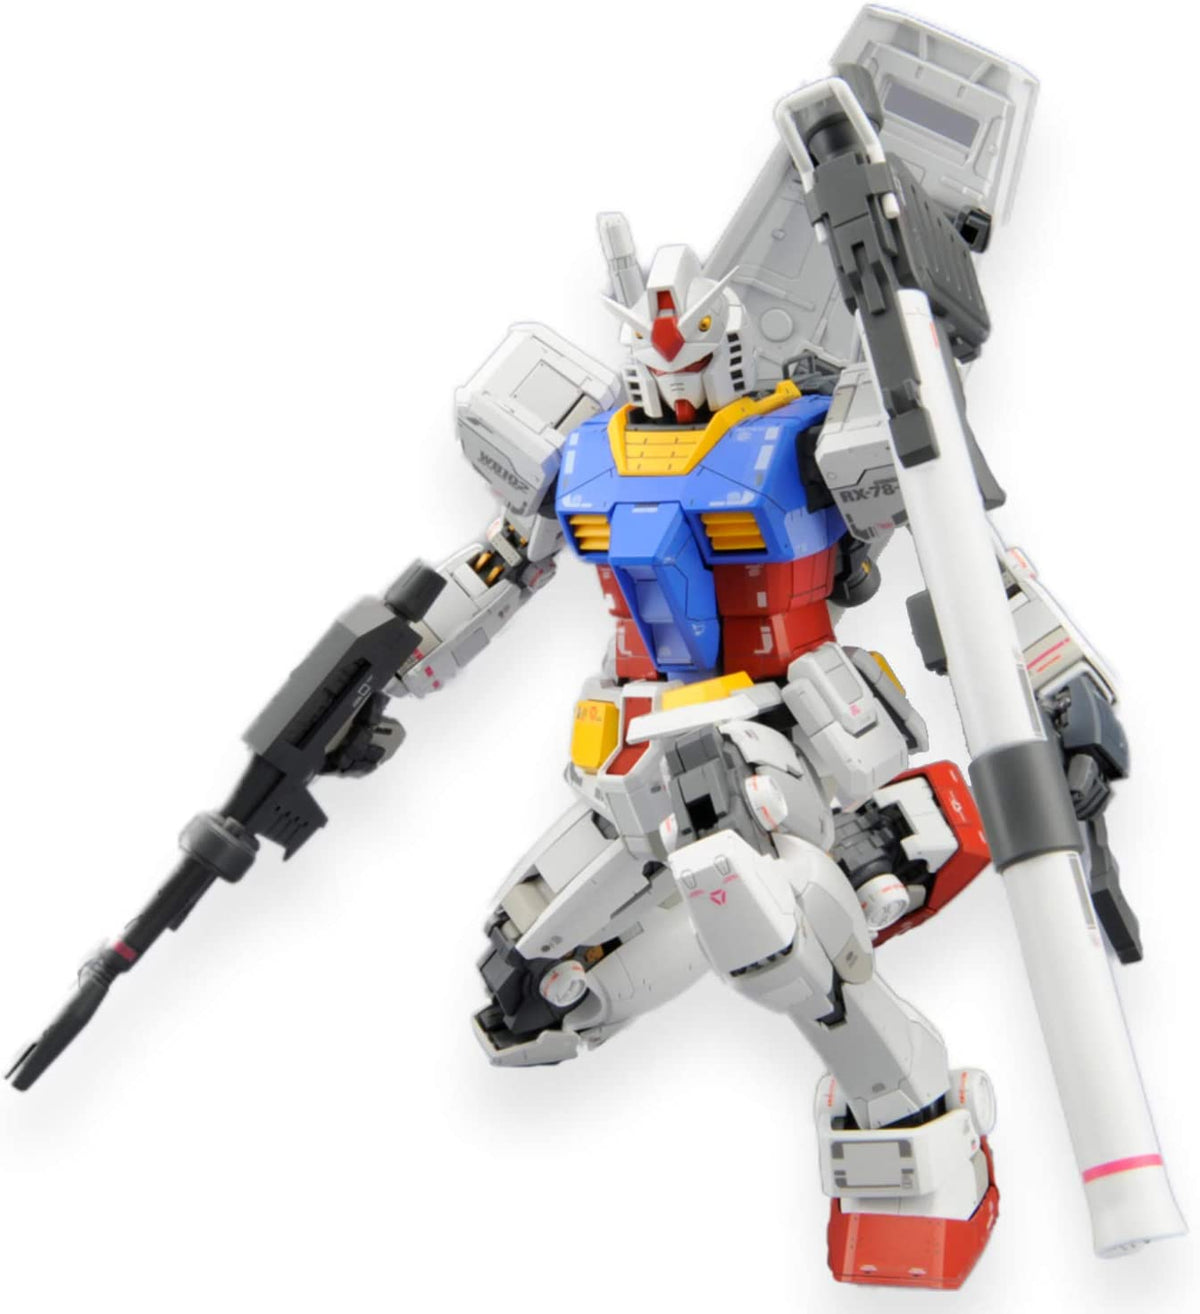 MG 1/100 RX-78-2 Gundam E.F.S.F Prototype Close-Combat Mobile Suit ver. 3.0